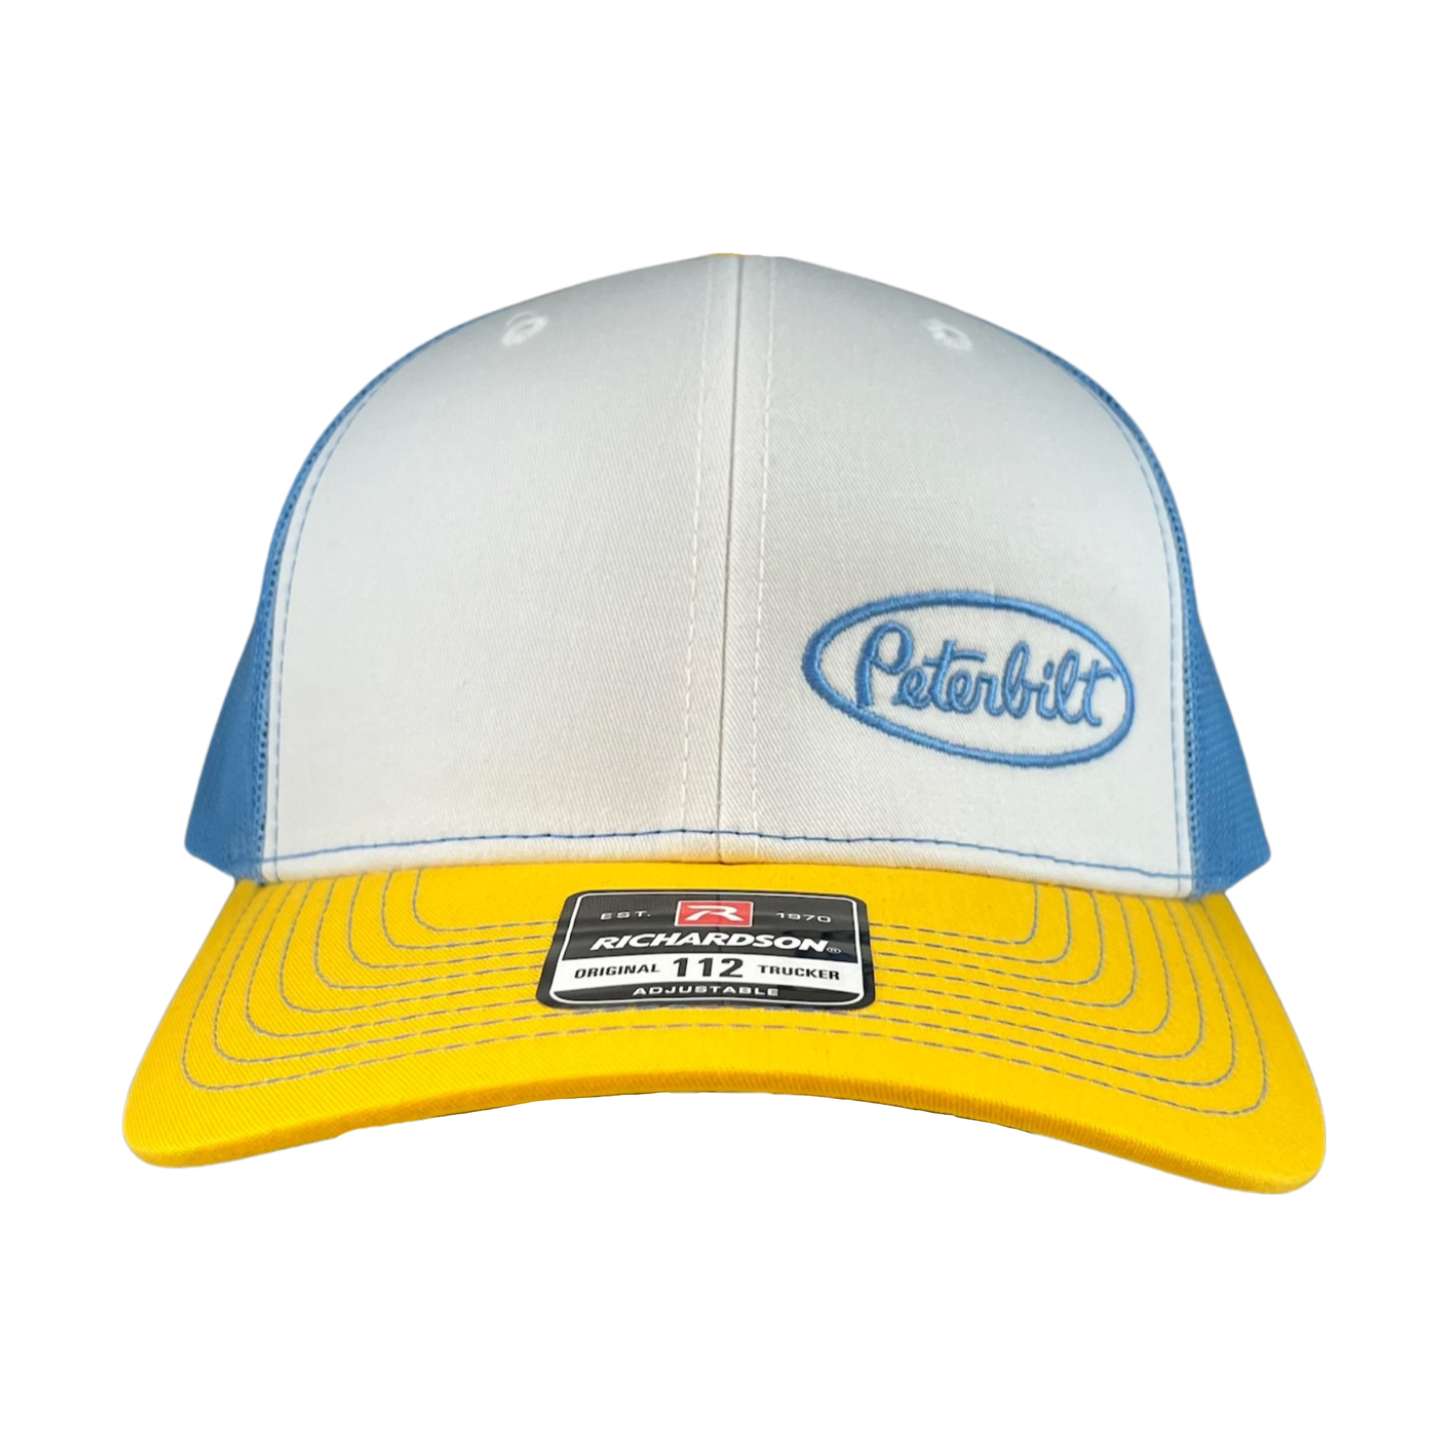 Classic White, Yellow, and Light Blue Peterbilt logo Trucker Cap